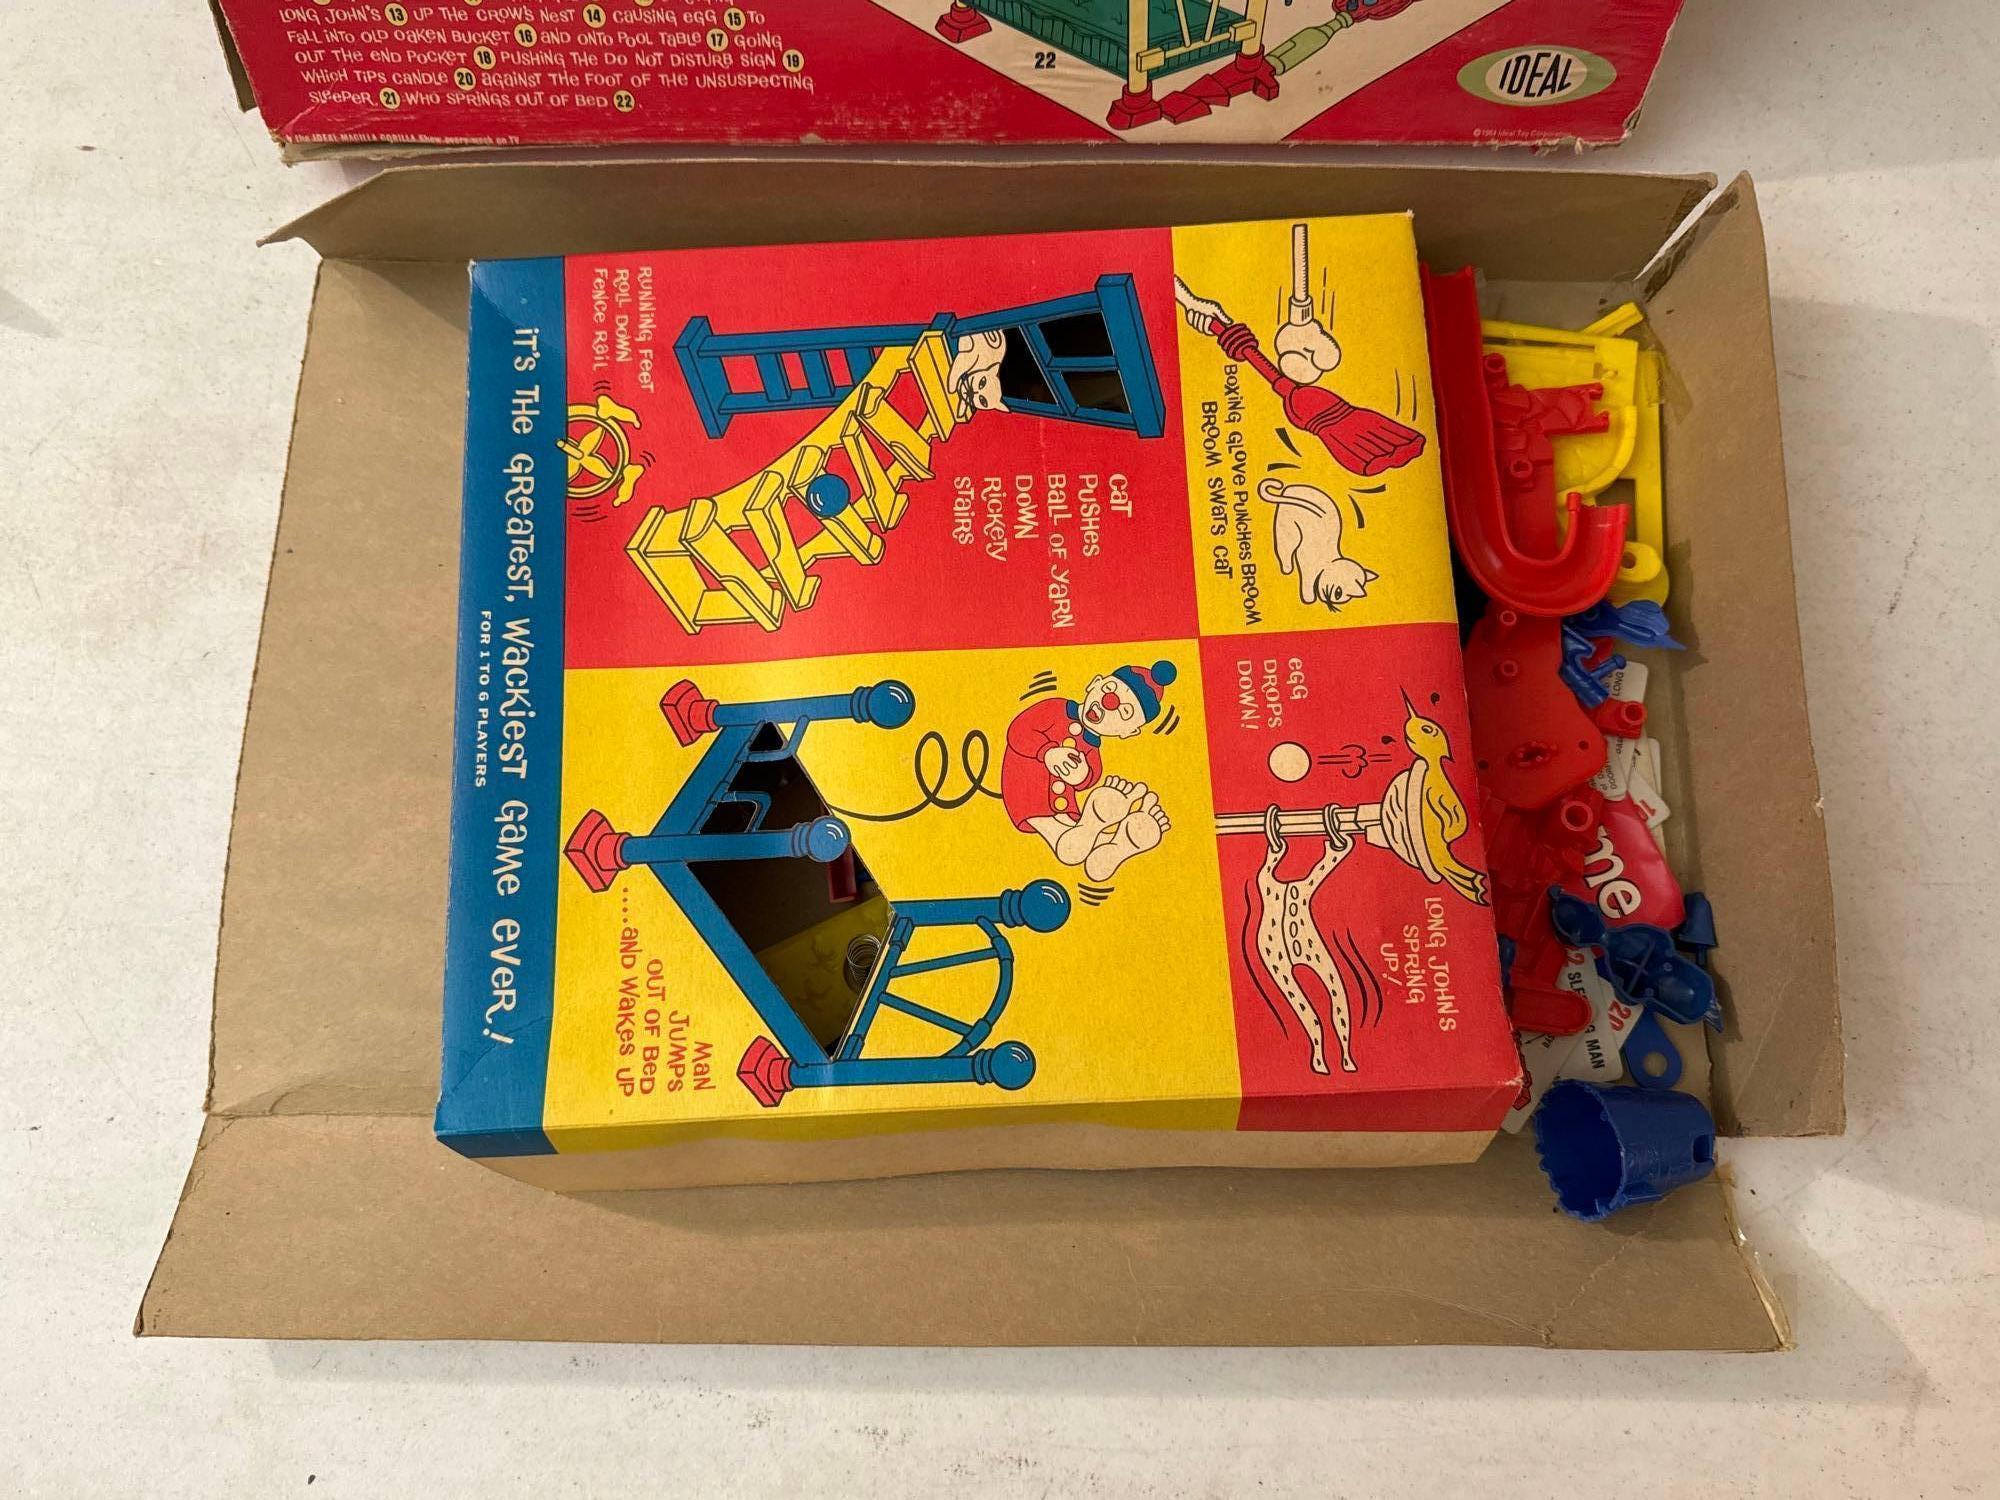 Vintage Crazy Clock Game & Molded Plastic Toys